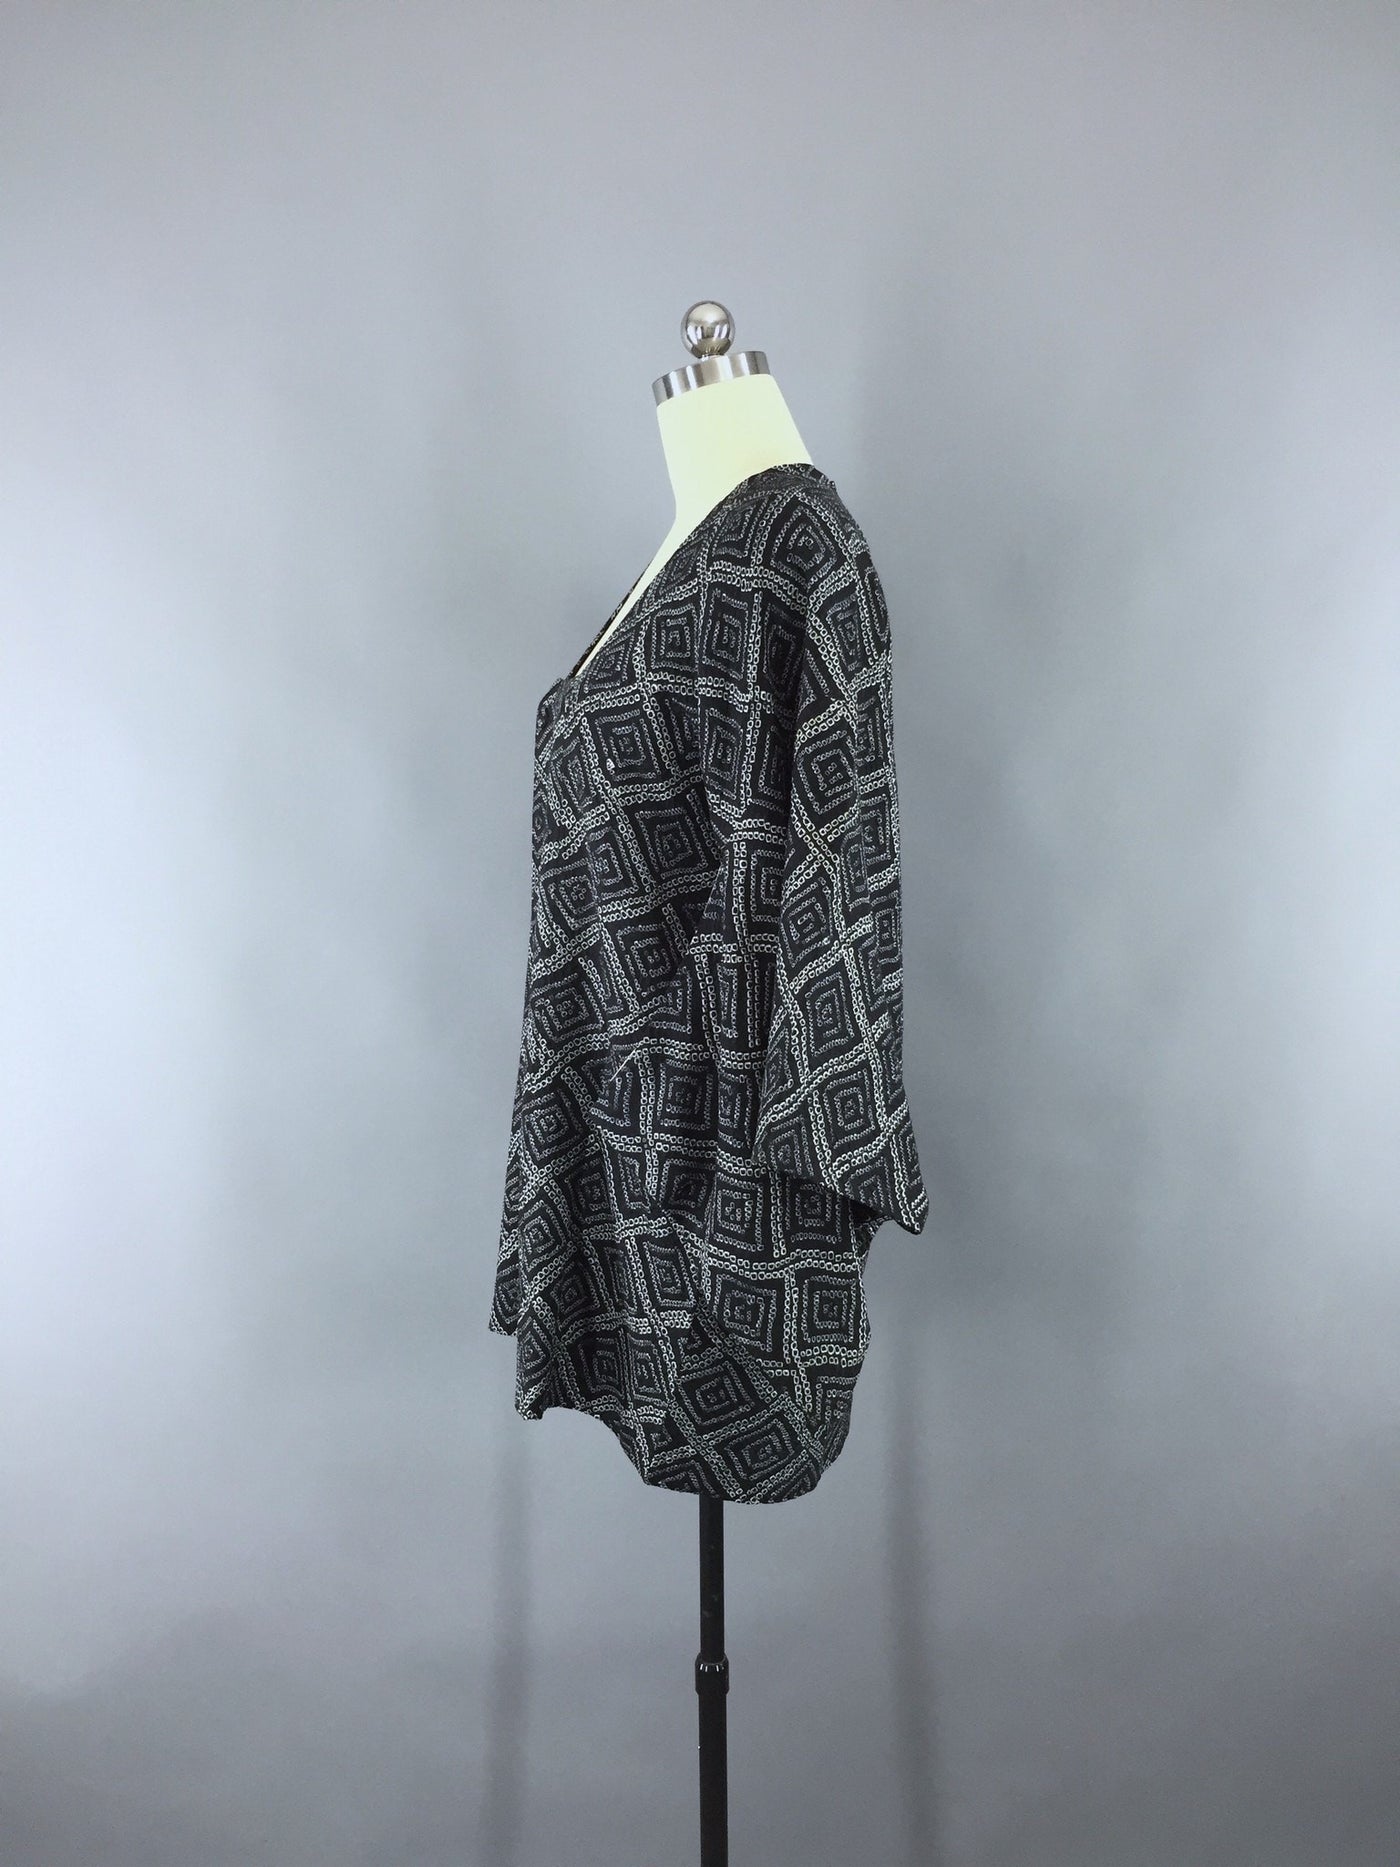 1950s Vintage Silk Michiyuki Kimono Coat Jacket in Black and White Shi ...